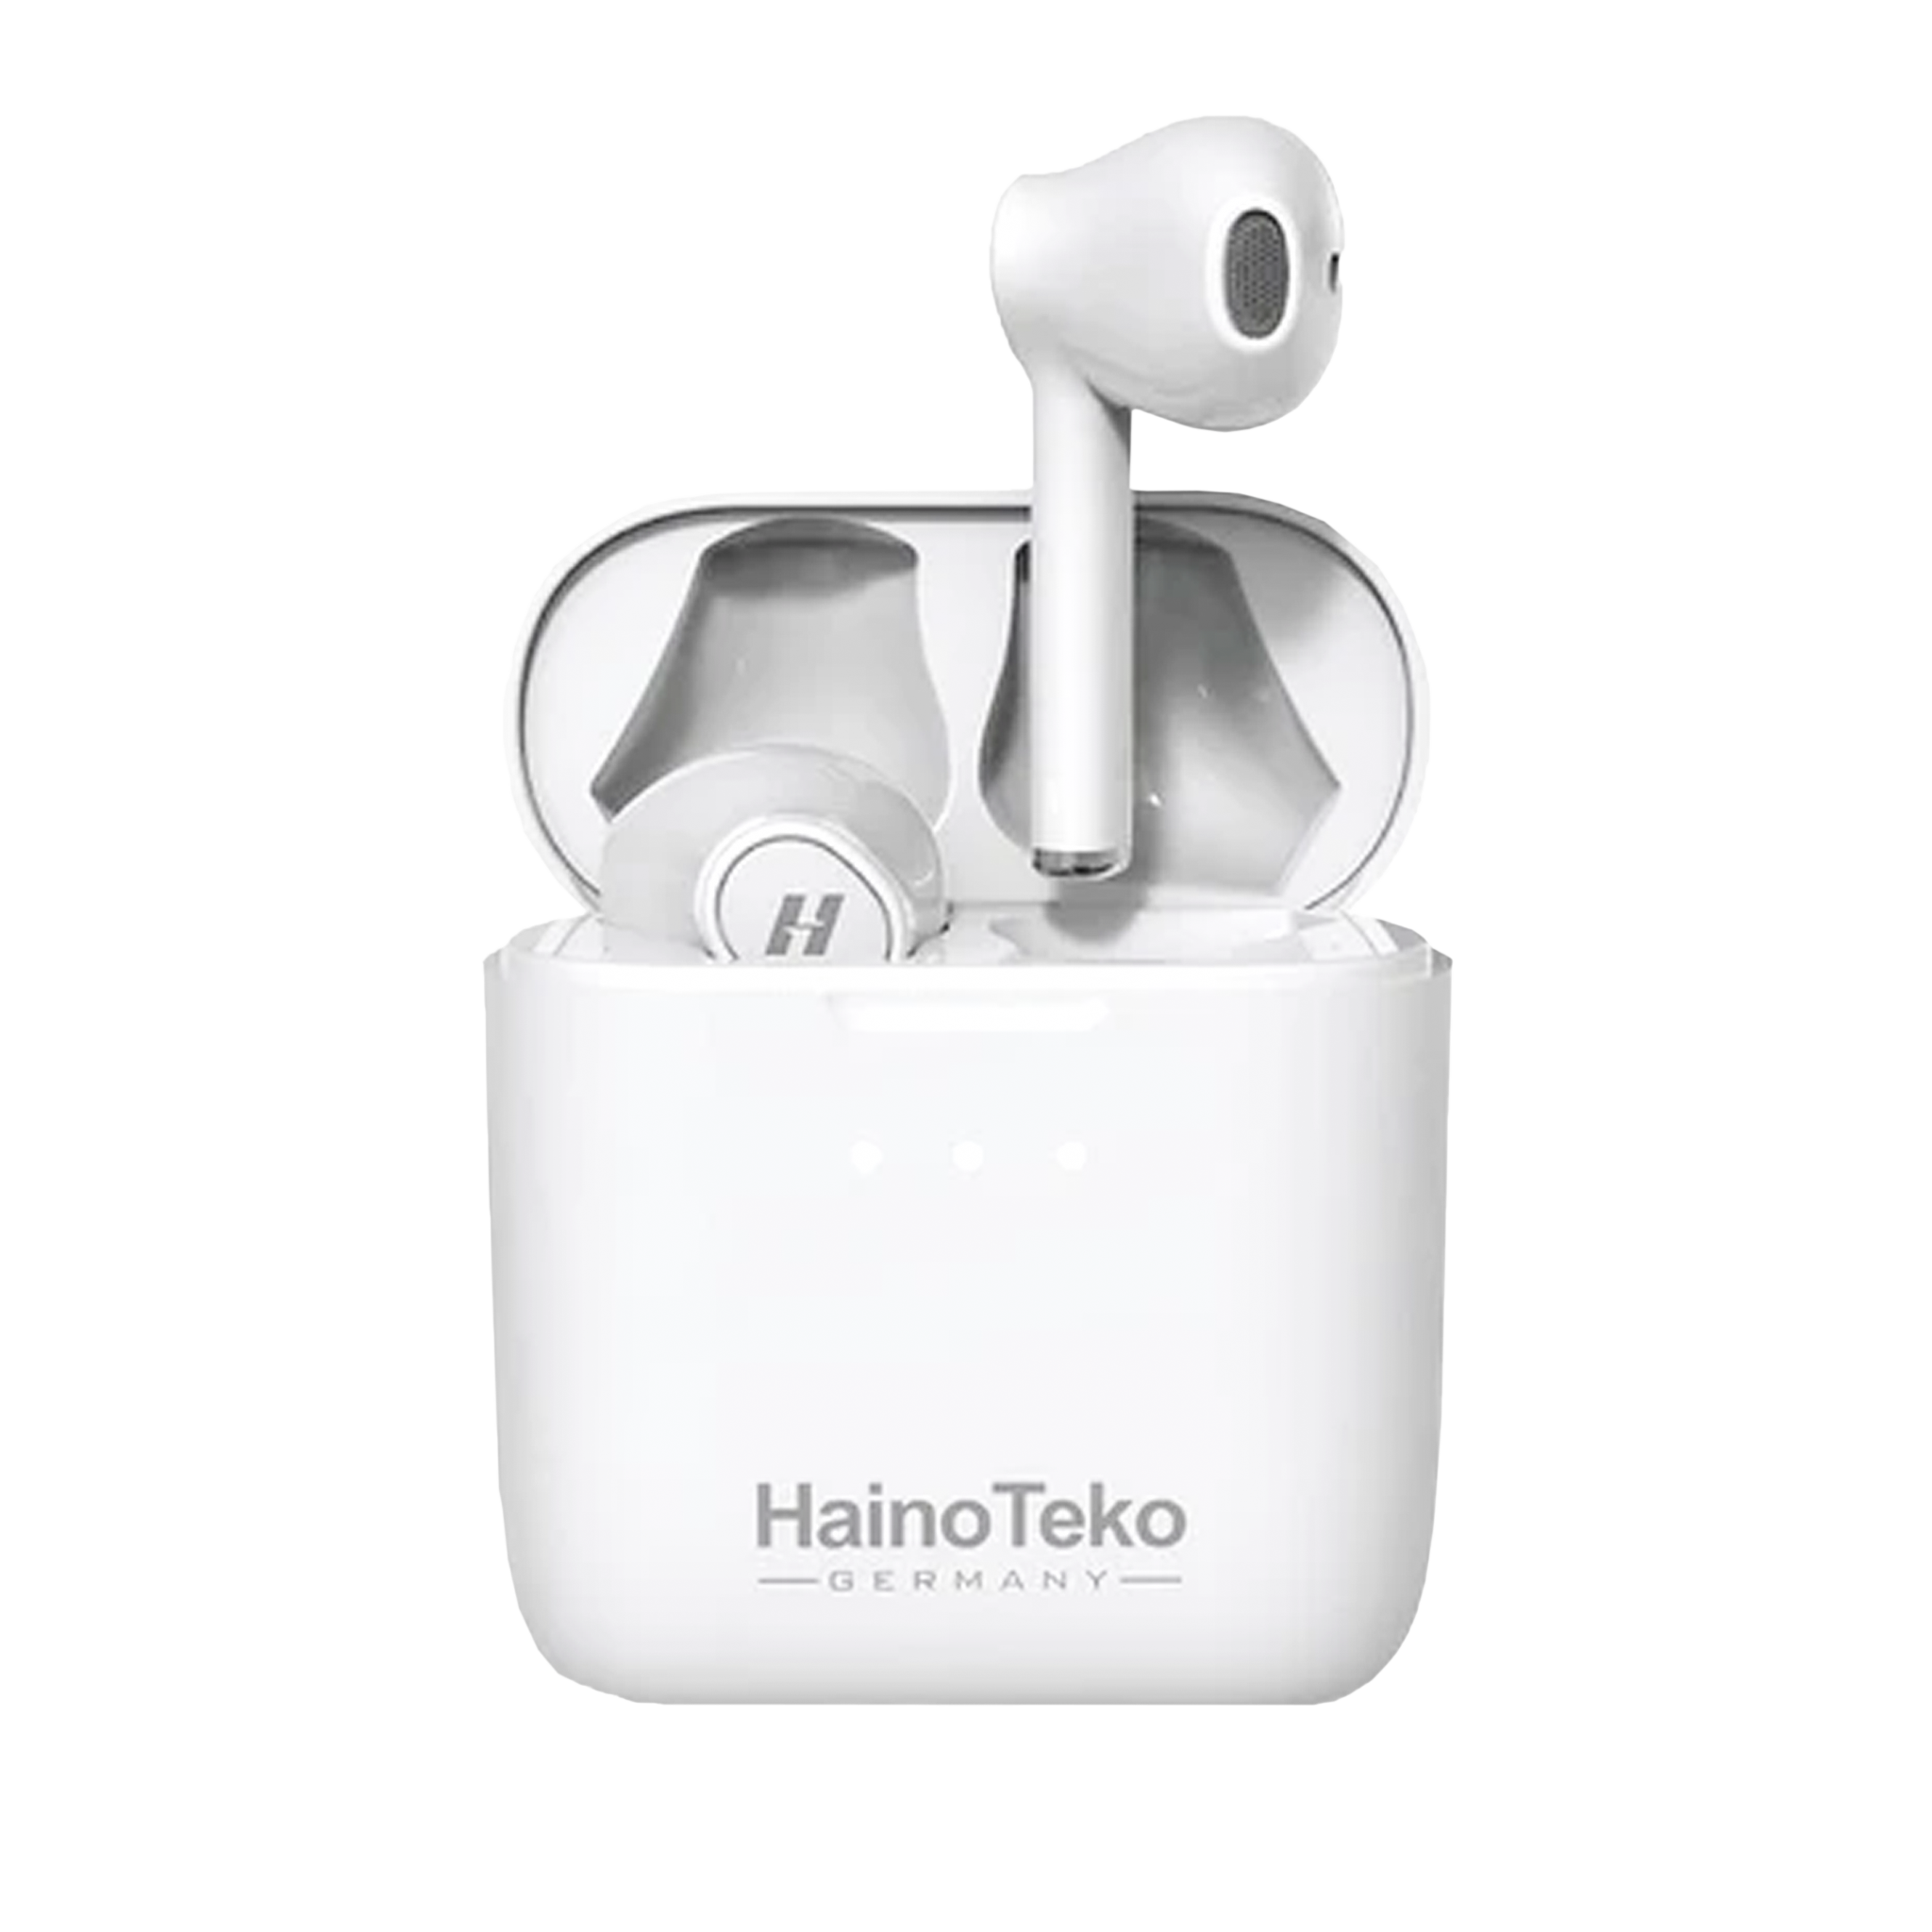 Haino Teko Air-11 Wireless Earphone